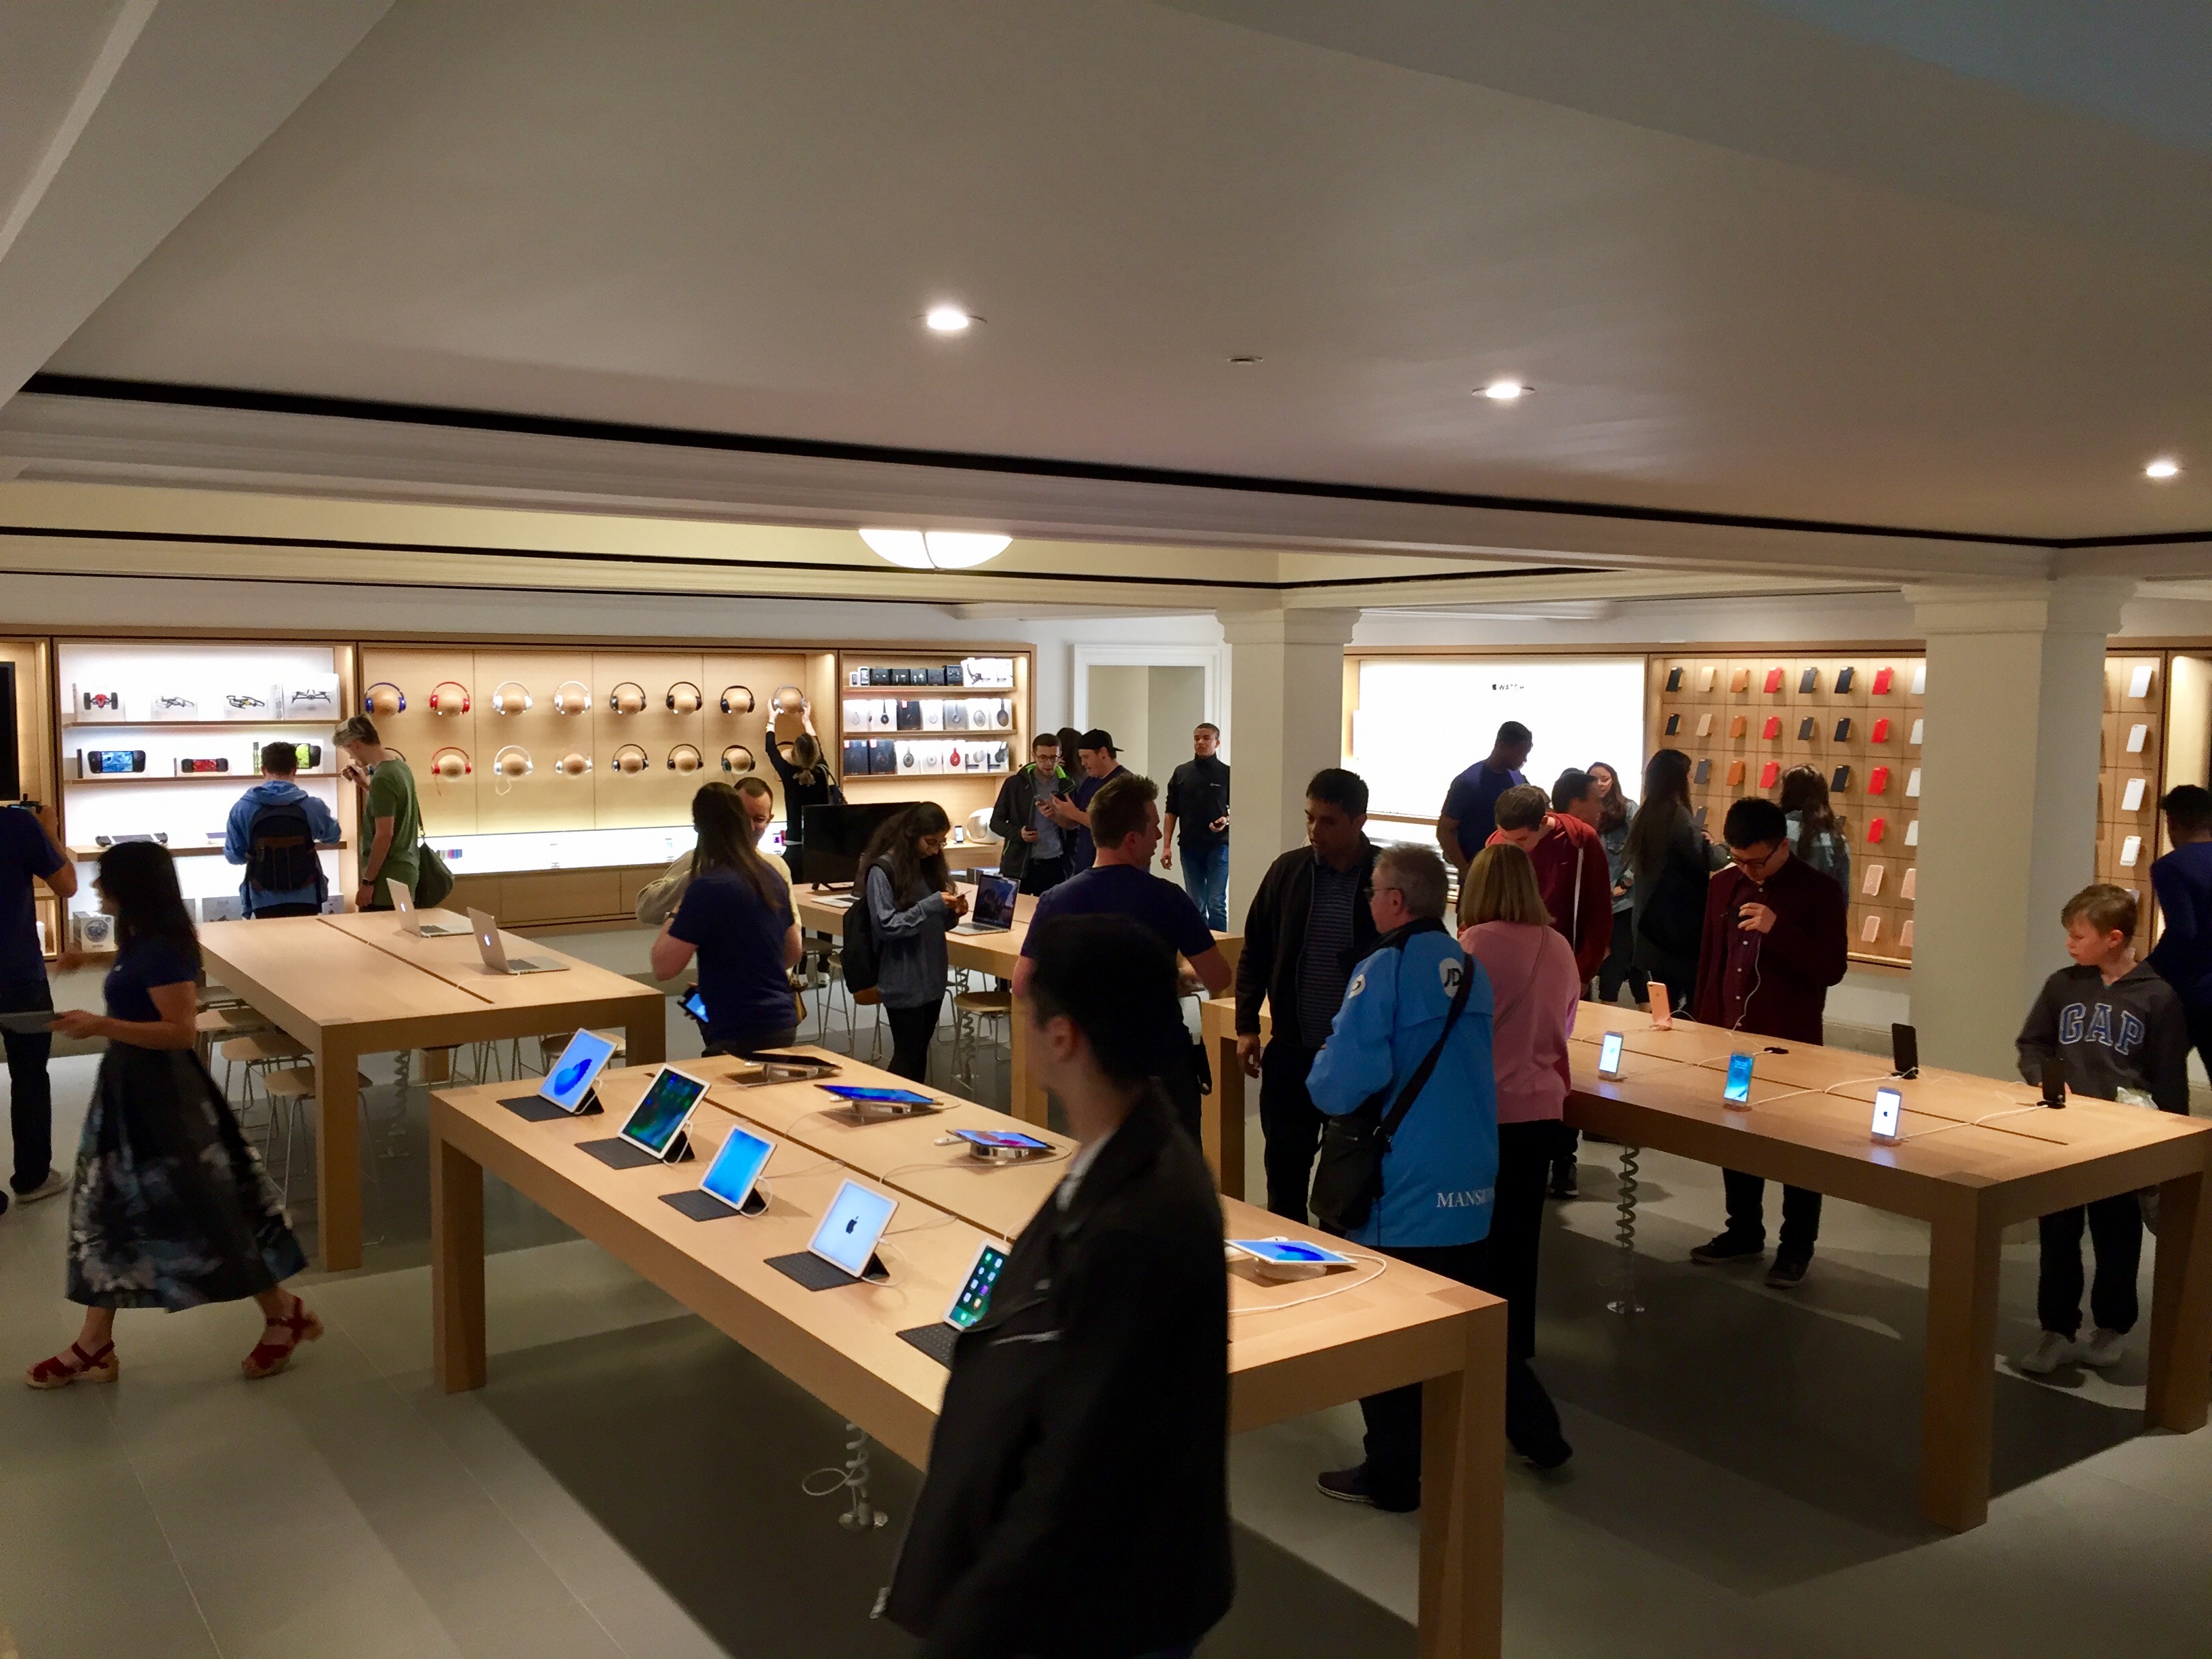 Apple's All-New Birmingham Store Opens September 24, Bullring Location